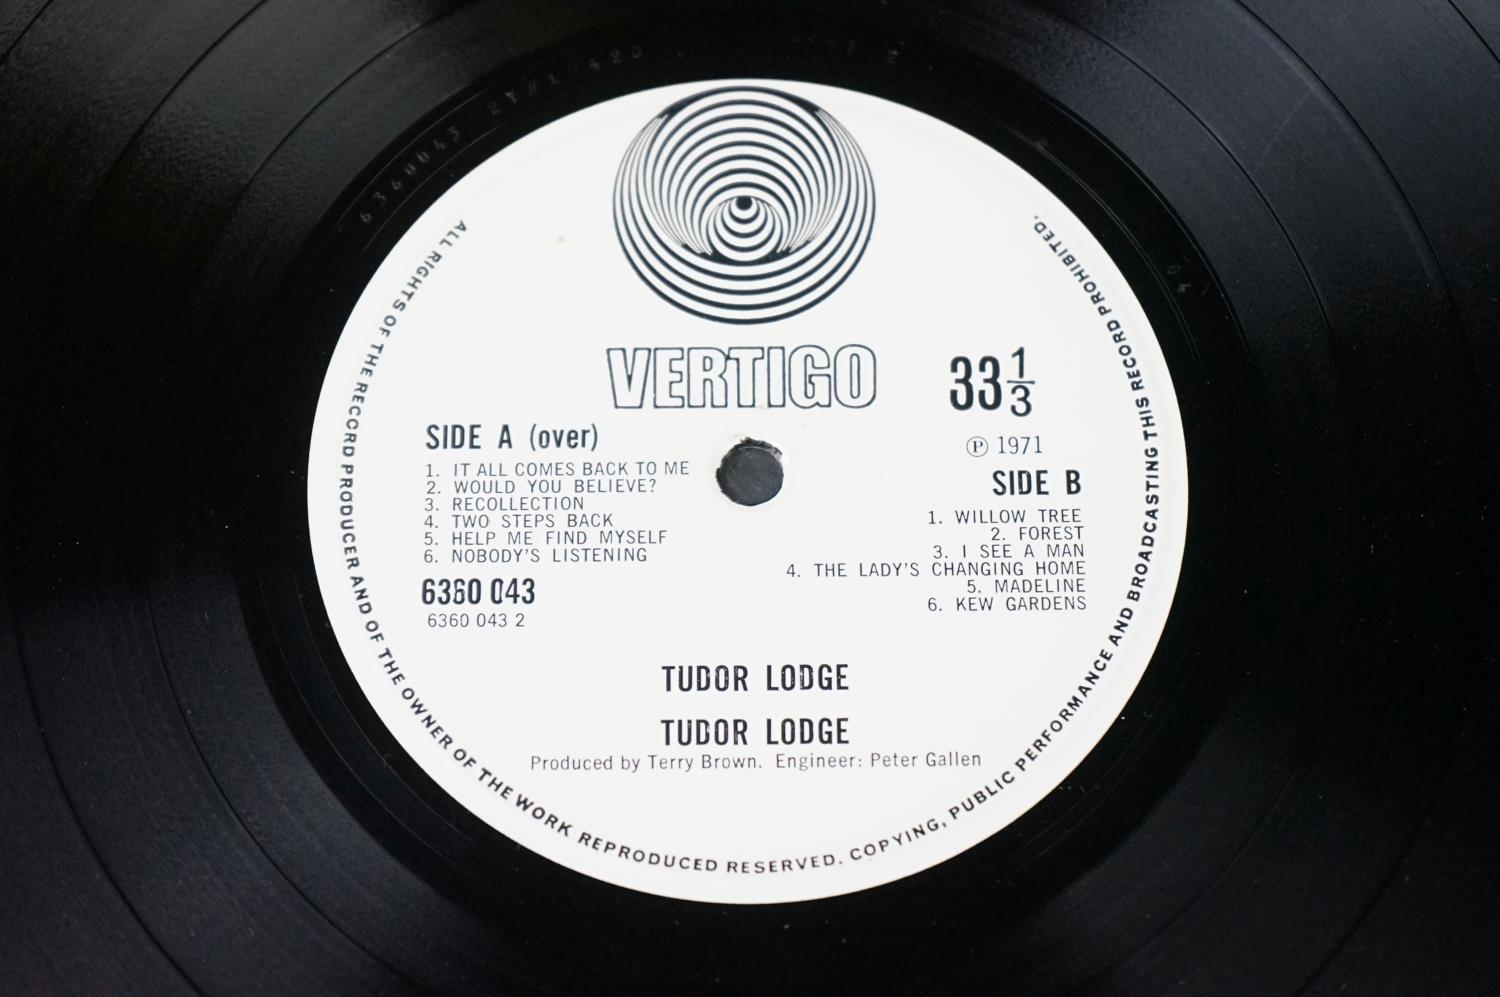 Vinyl - Tudor Lodge self titled LP on Vertigo Records 6360 043. Original UK 1971 1st pressing. - Image 4 of 6